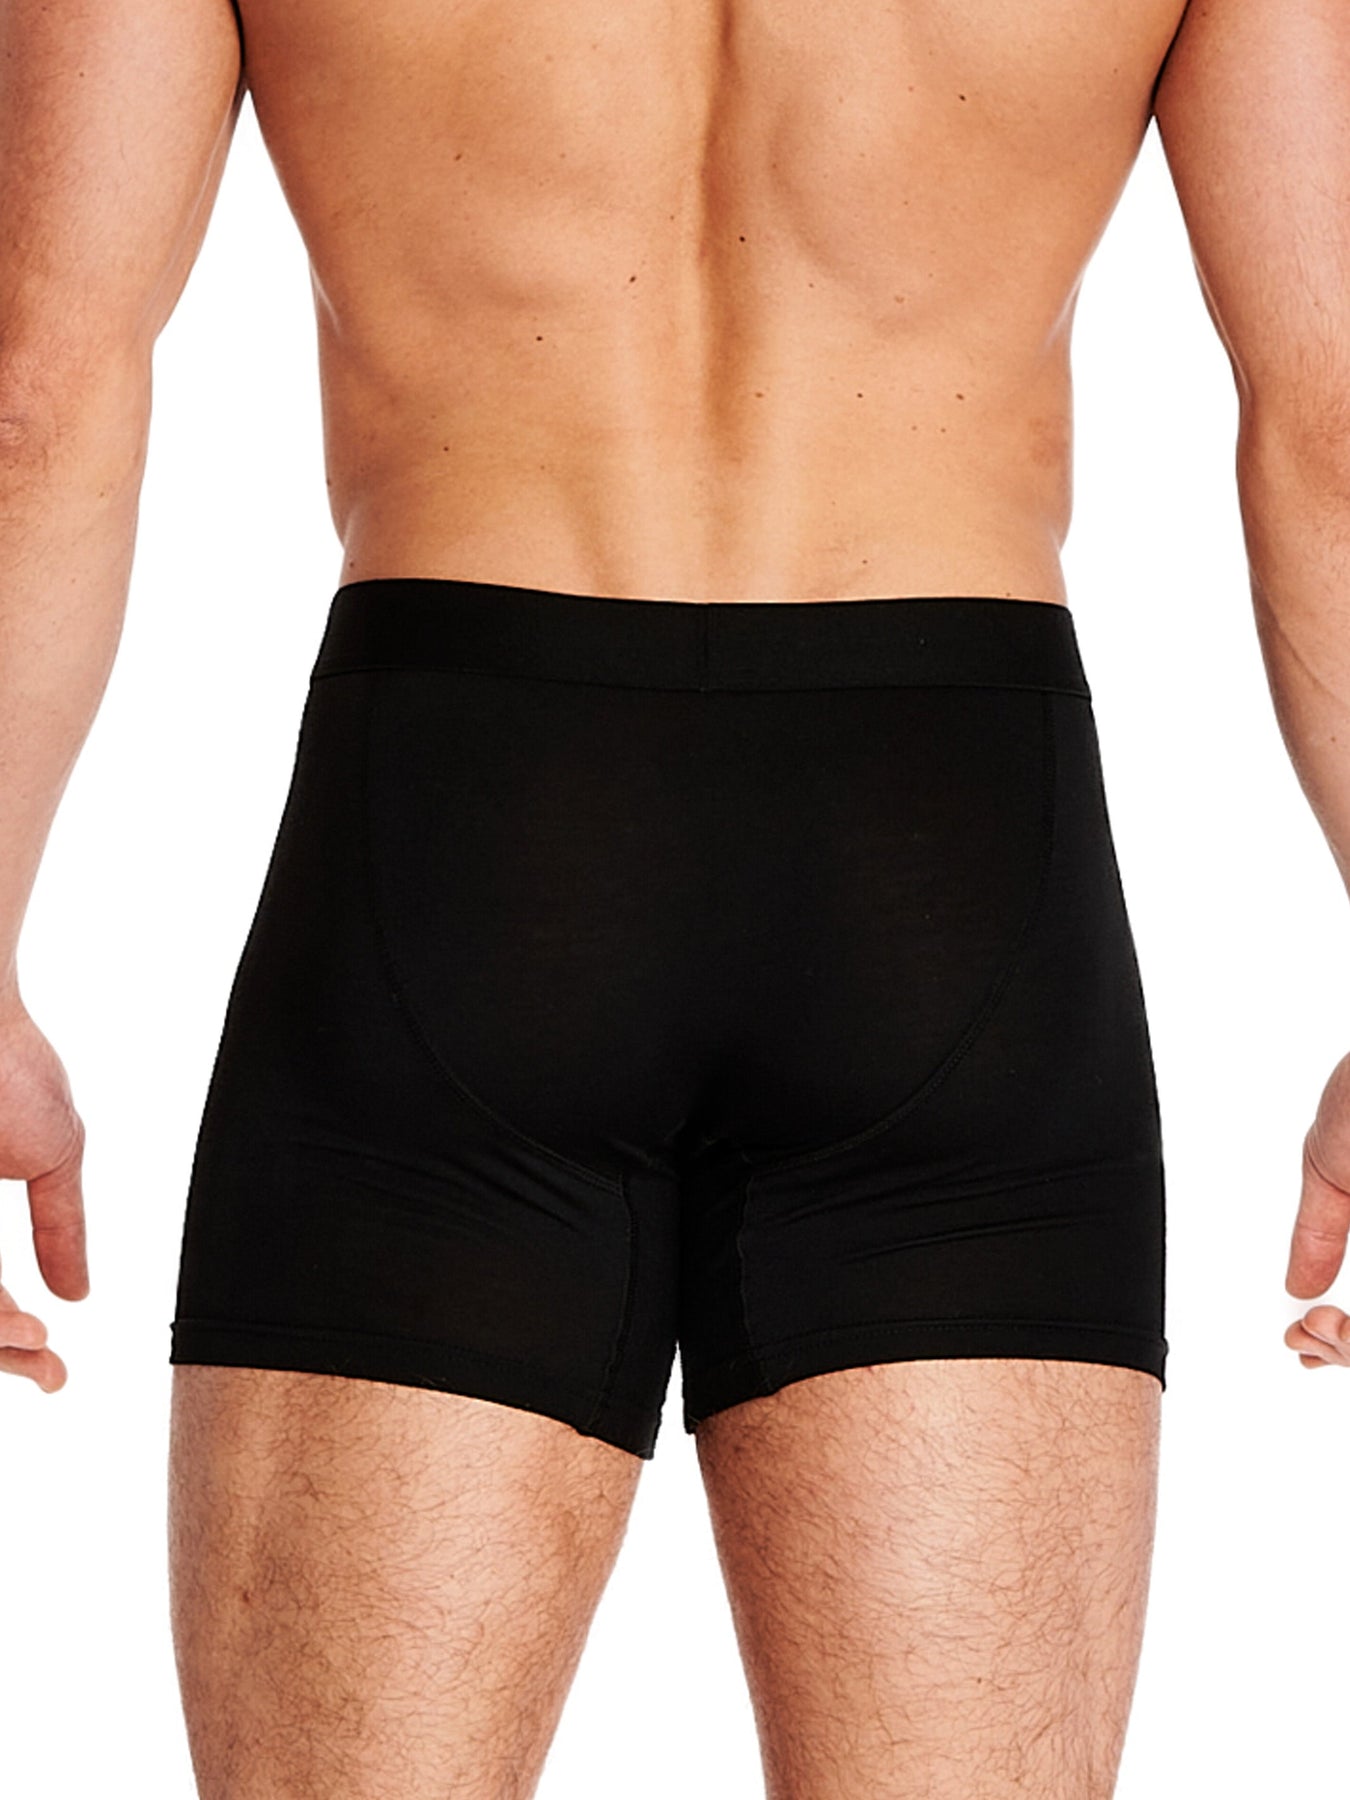 Newman Boxer Brief Solid Black - Men's Underwear